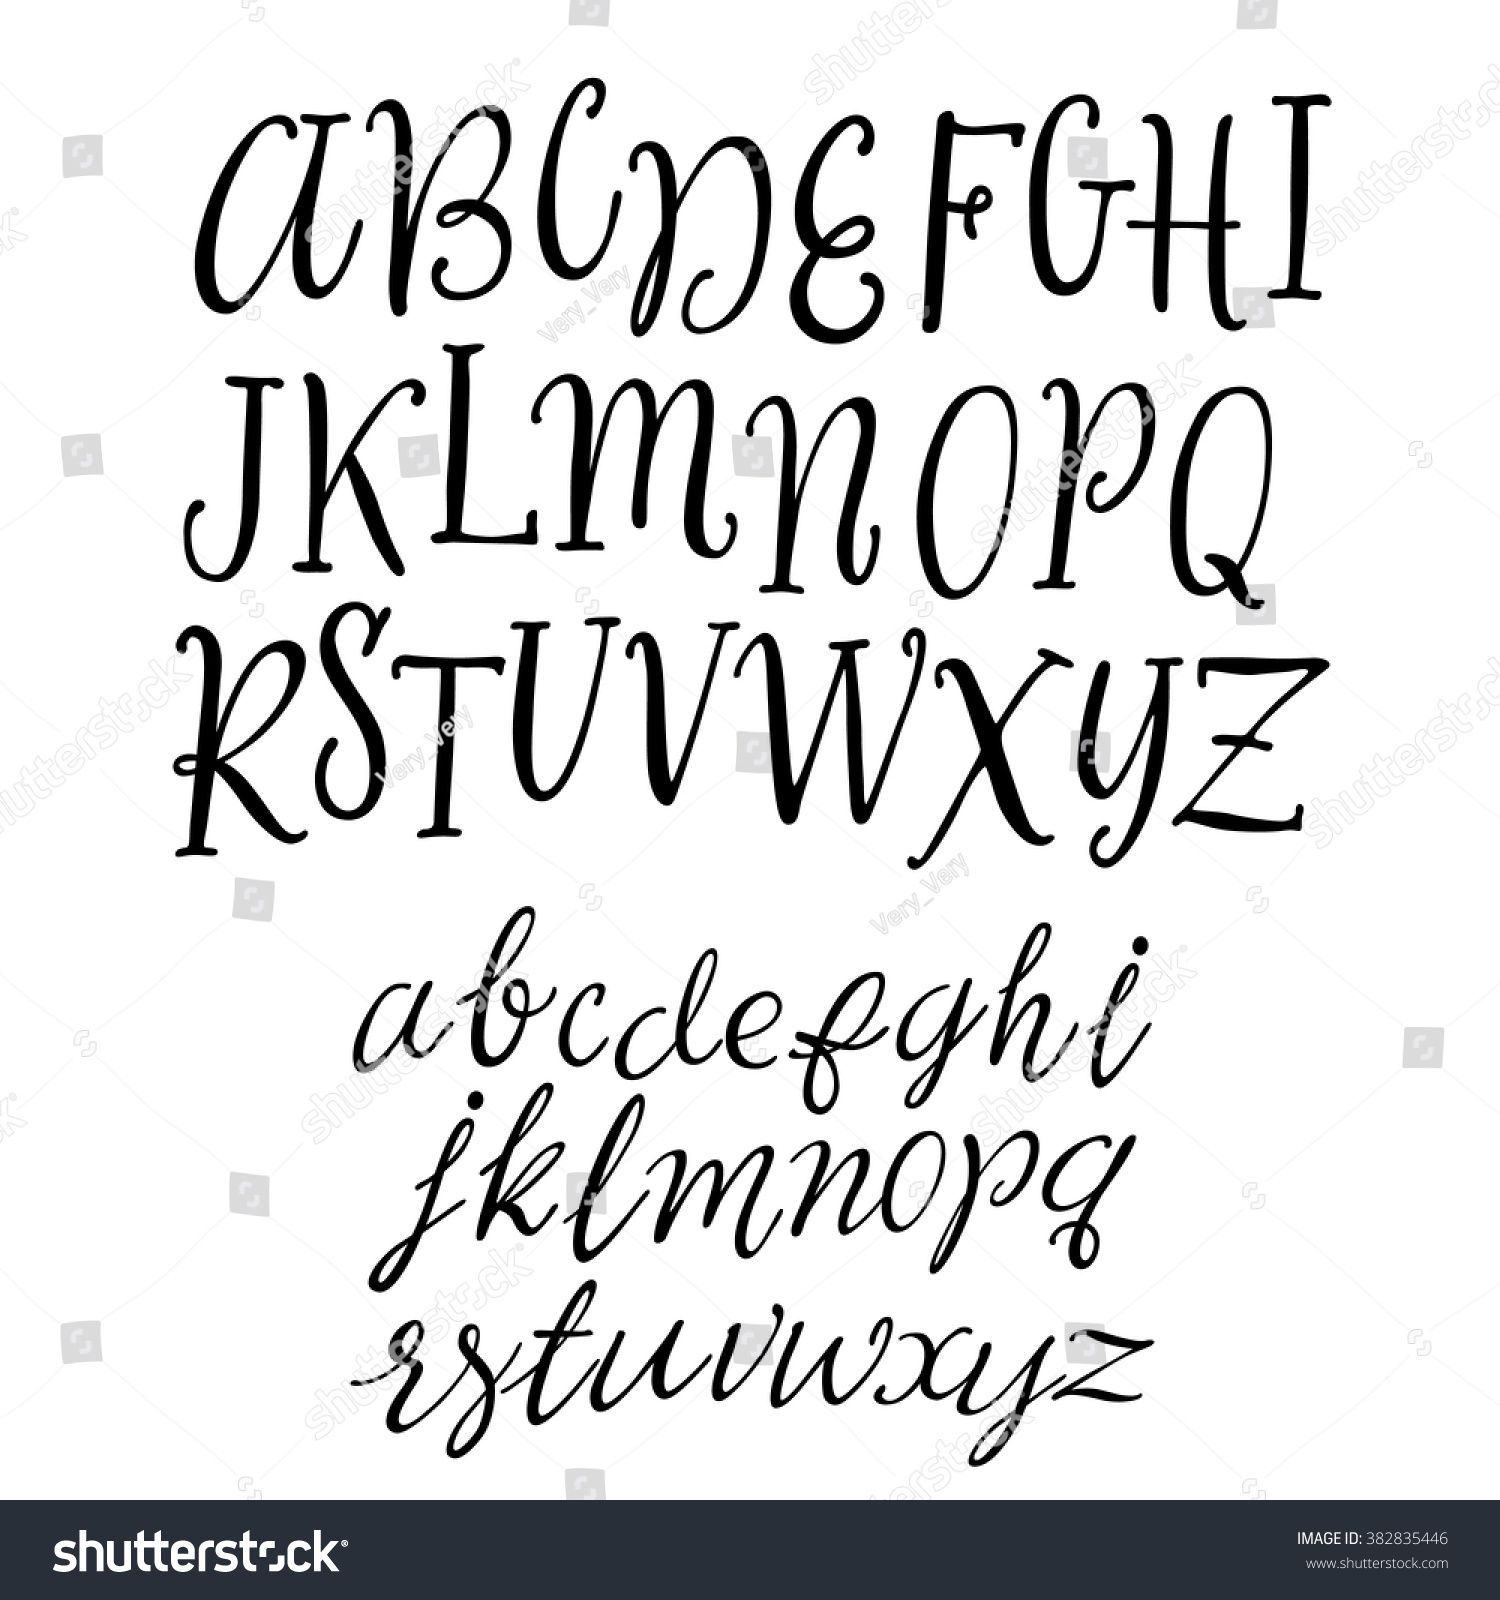 Hand Drawn Decorative Vector Abc Letters. - 382835446 : Shutterstock